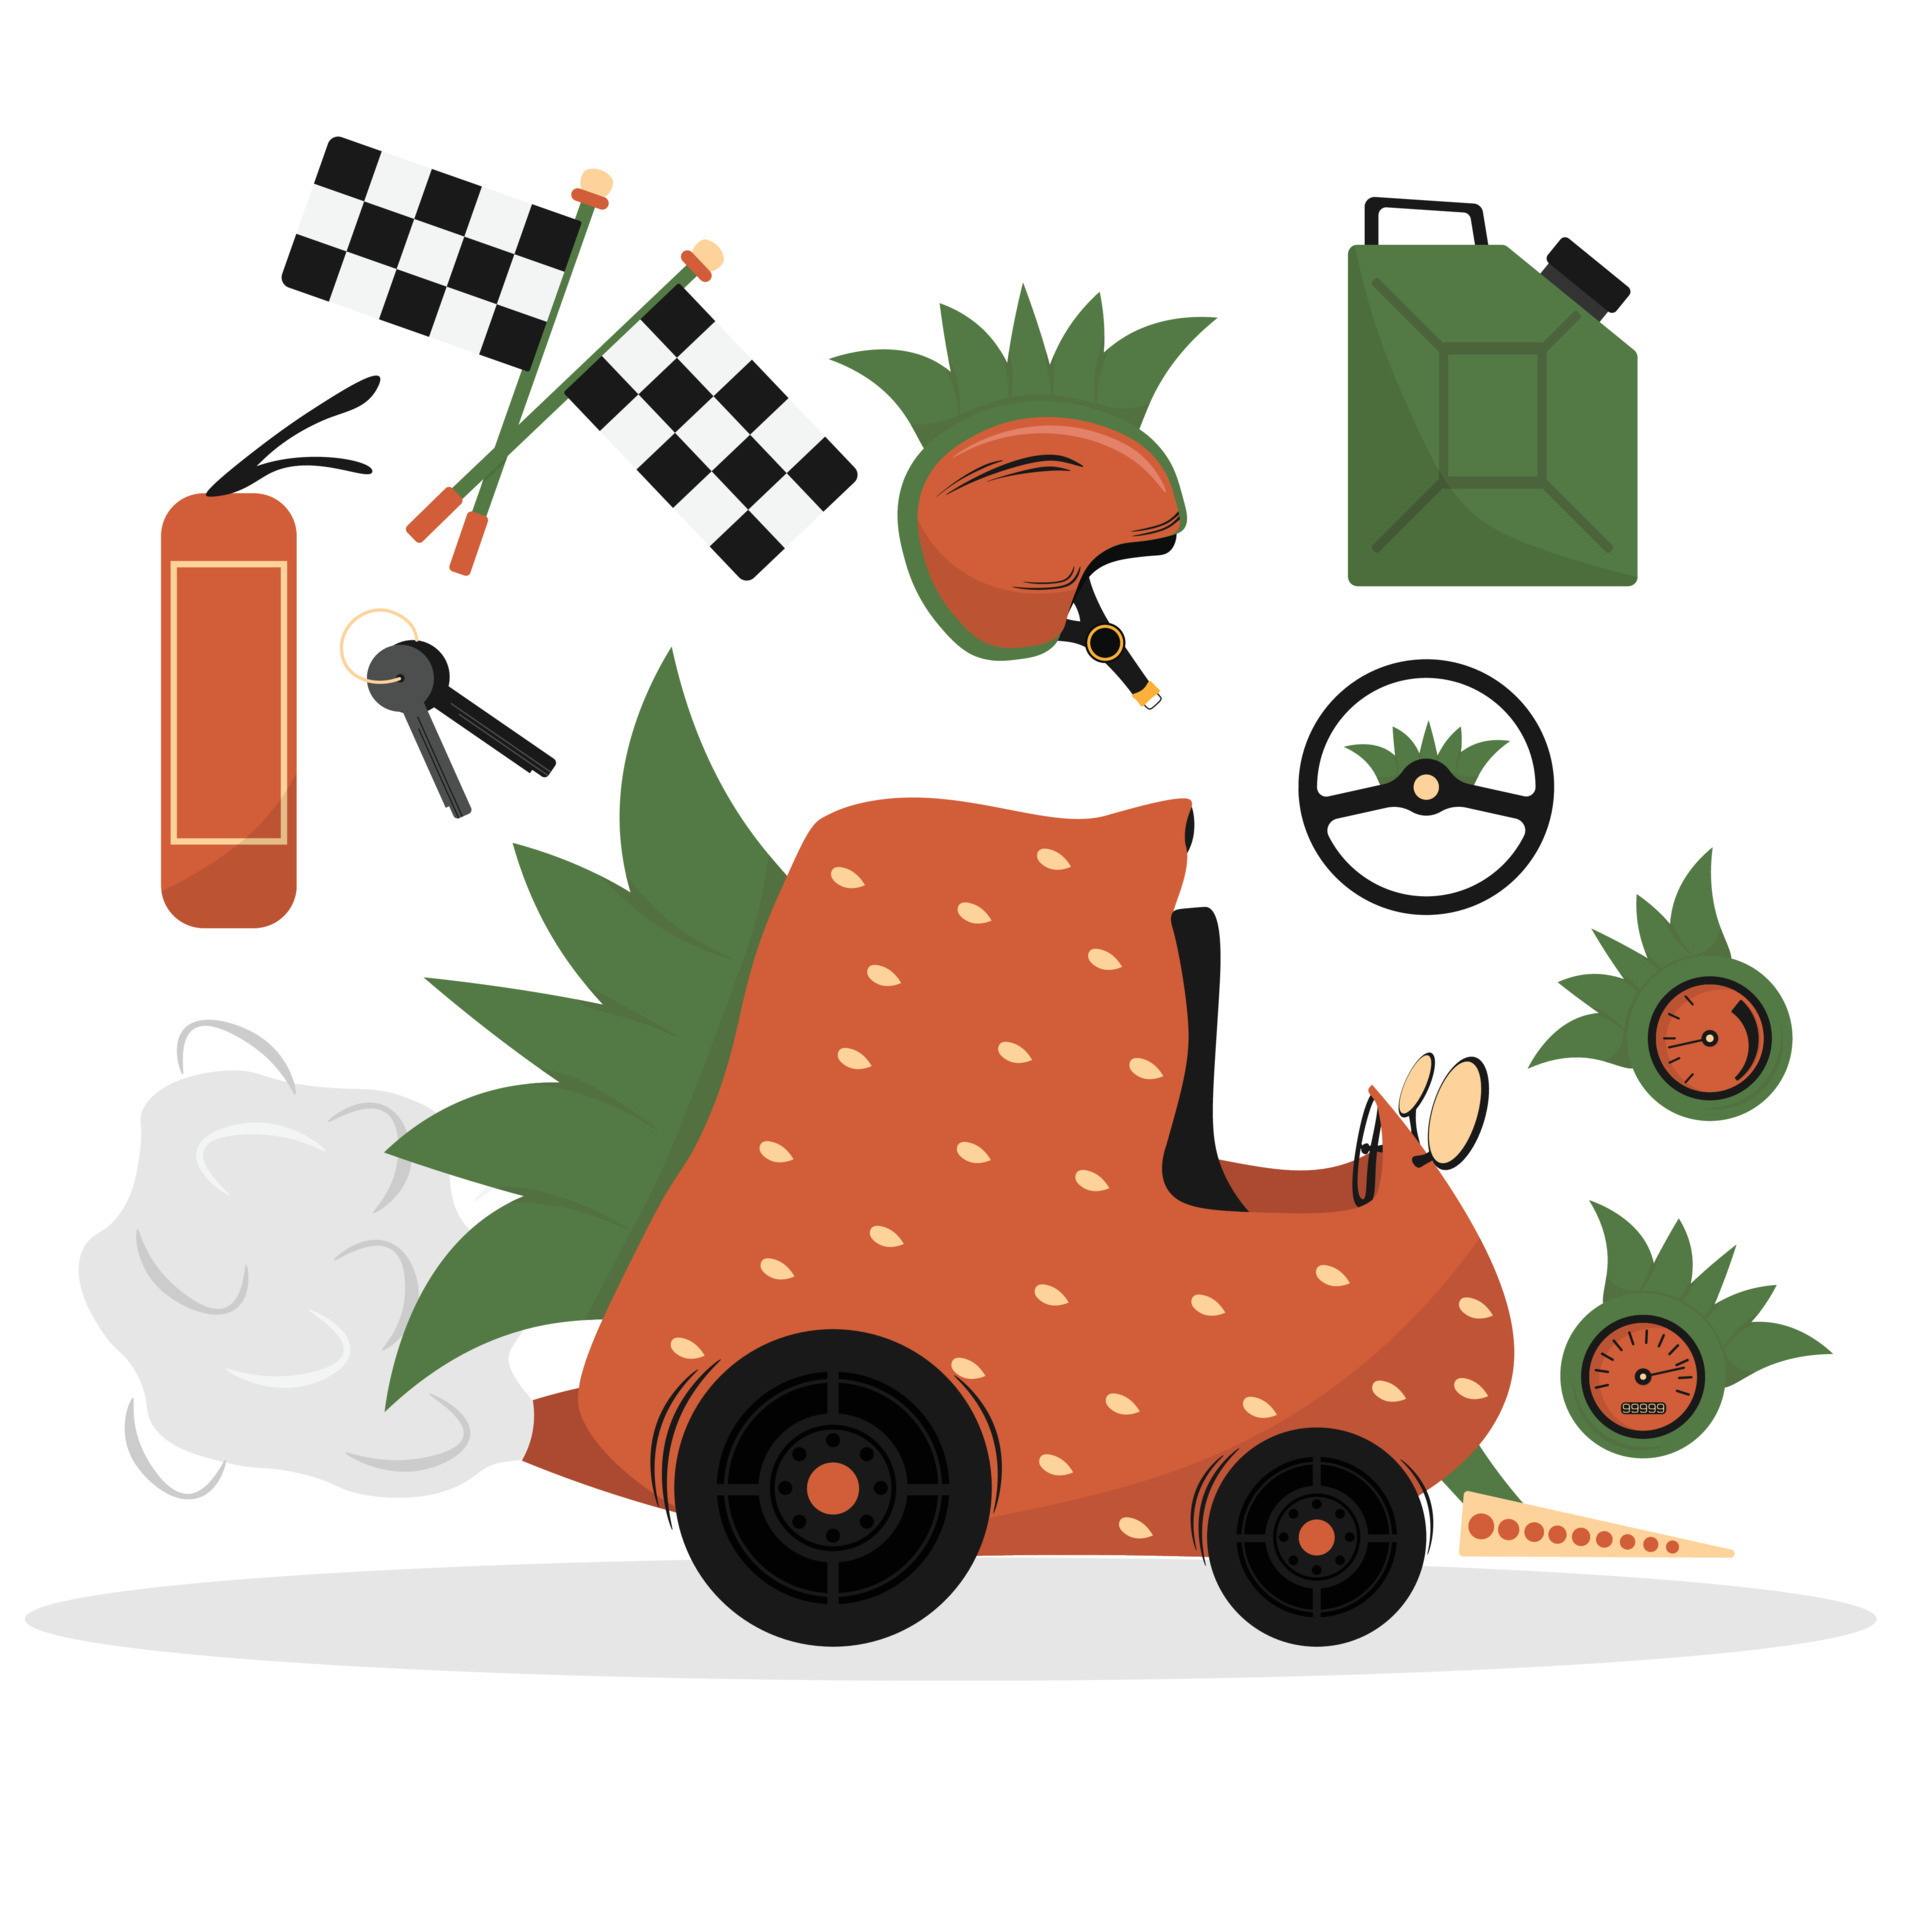 Cartoon pea car. Pea truck with racing car accessories